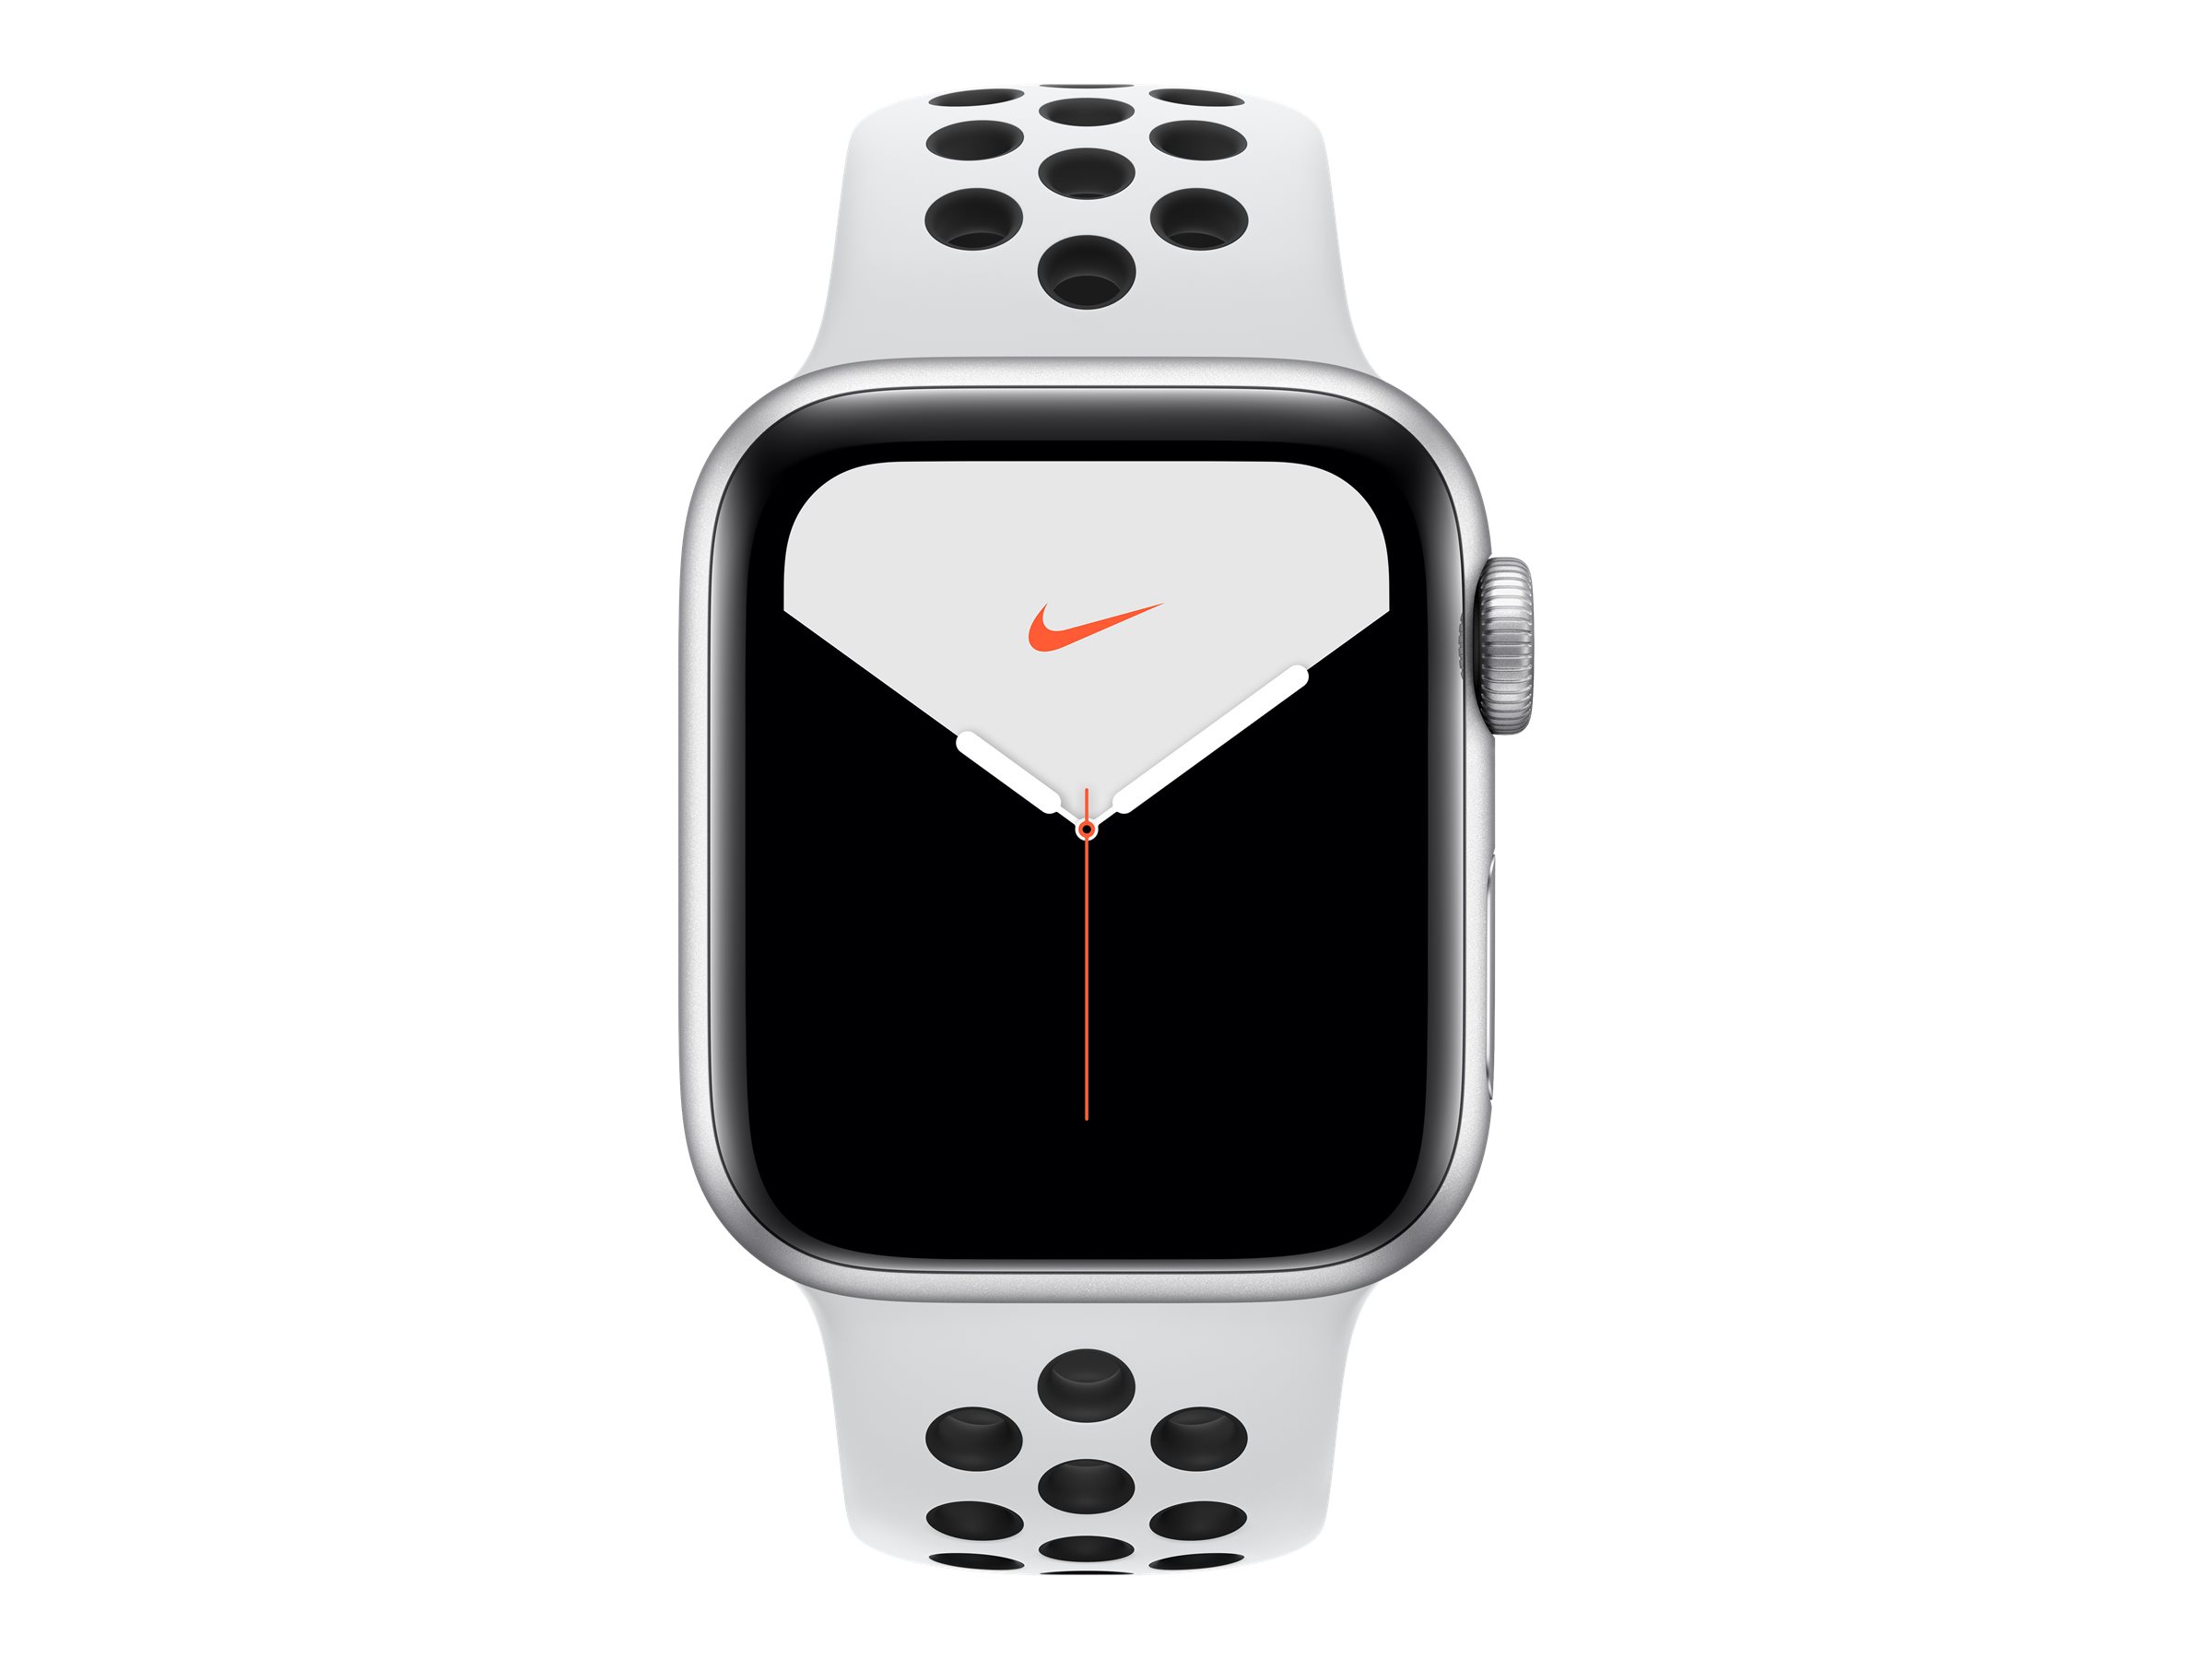 Apple Watch Nike Series 5 (GPS + Cellular) - full specs, details